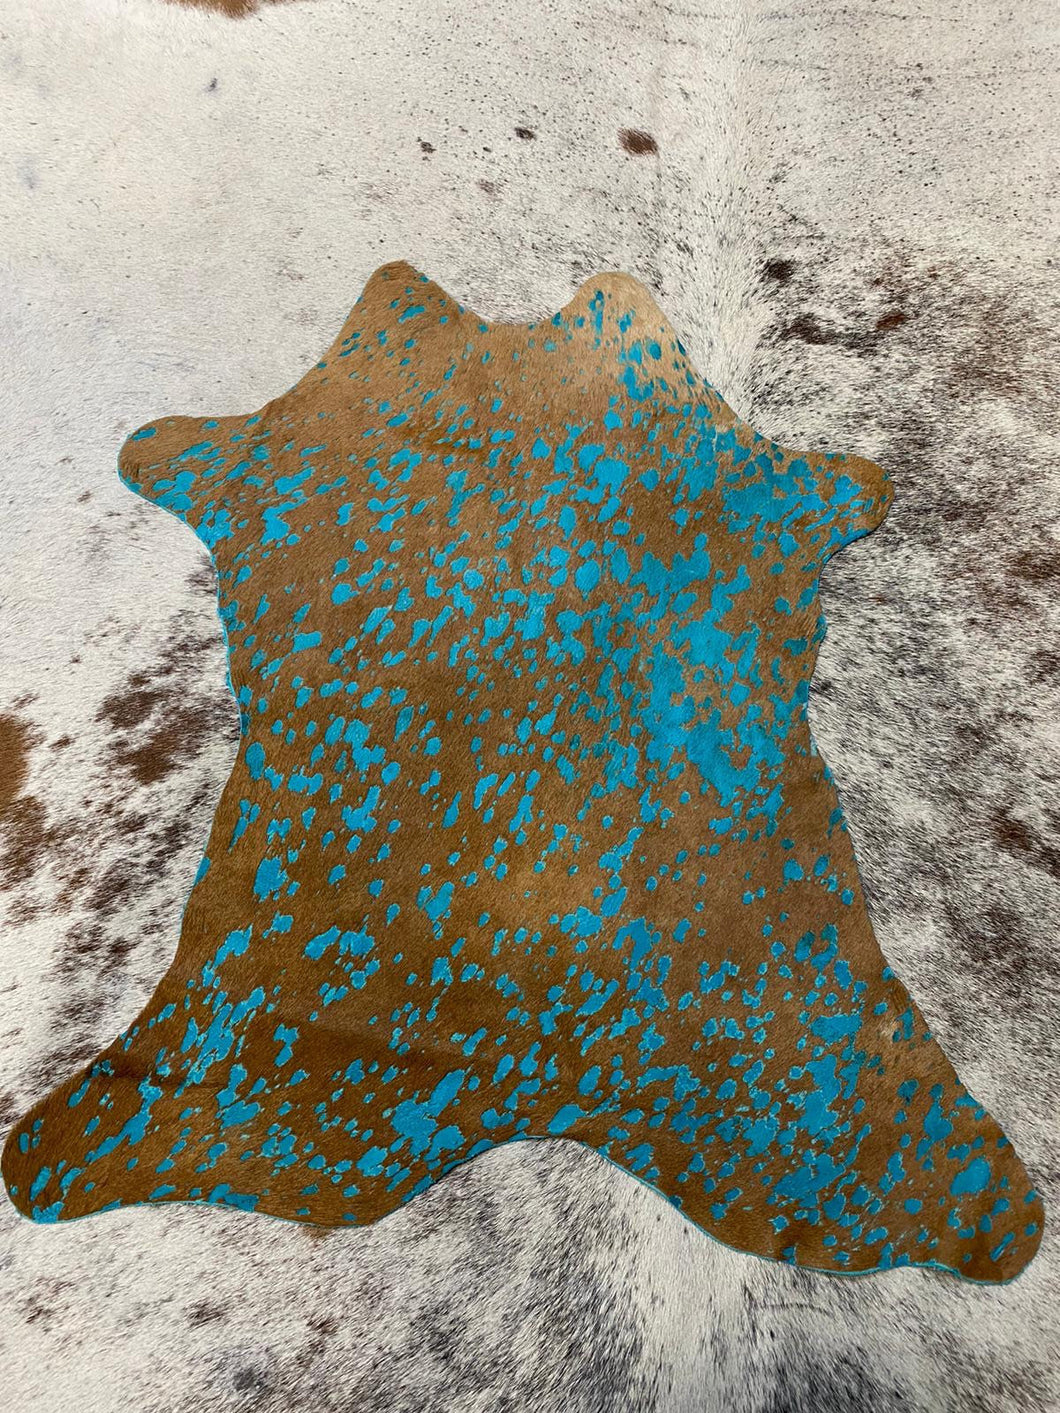 Turquoise On BrownAcid Wash Printed Design Calf Hide Rug